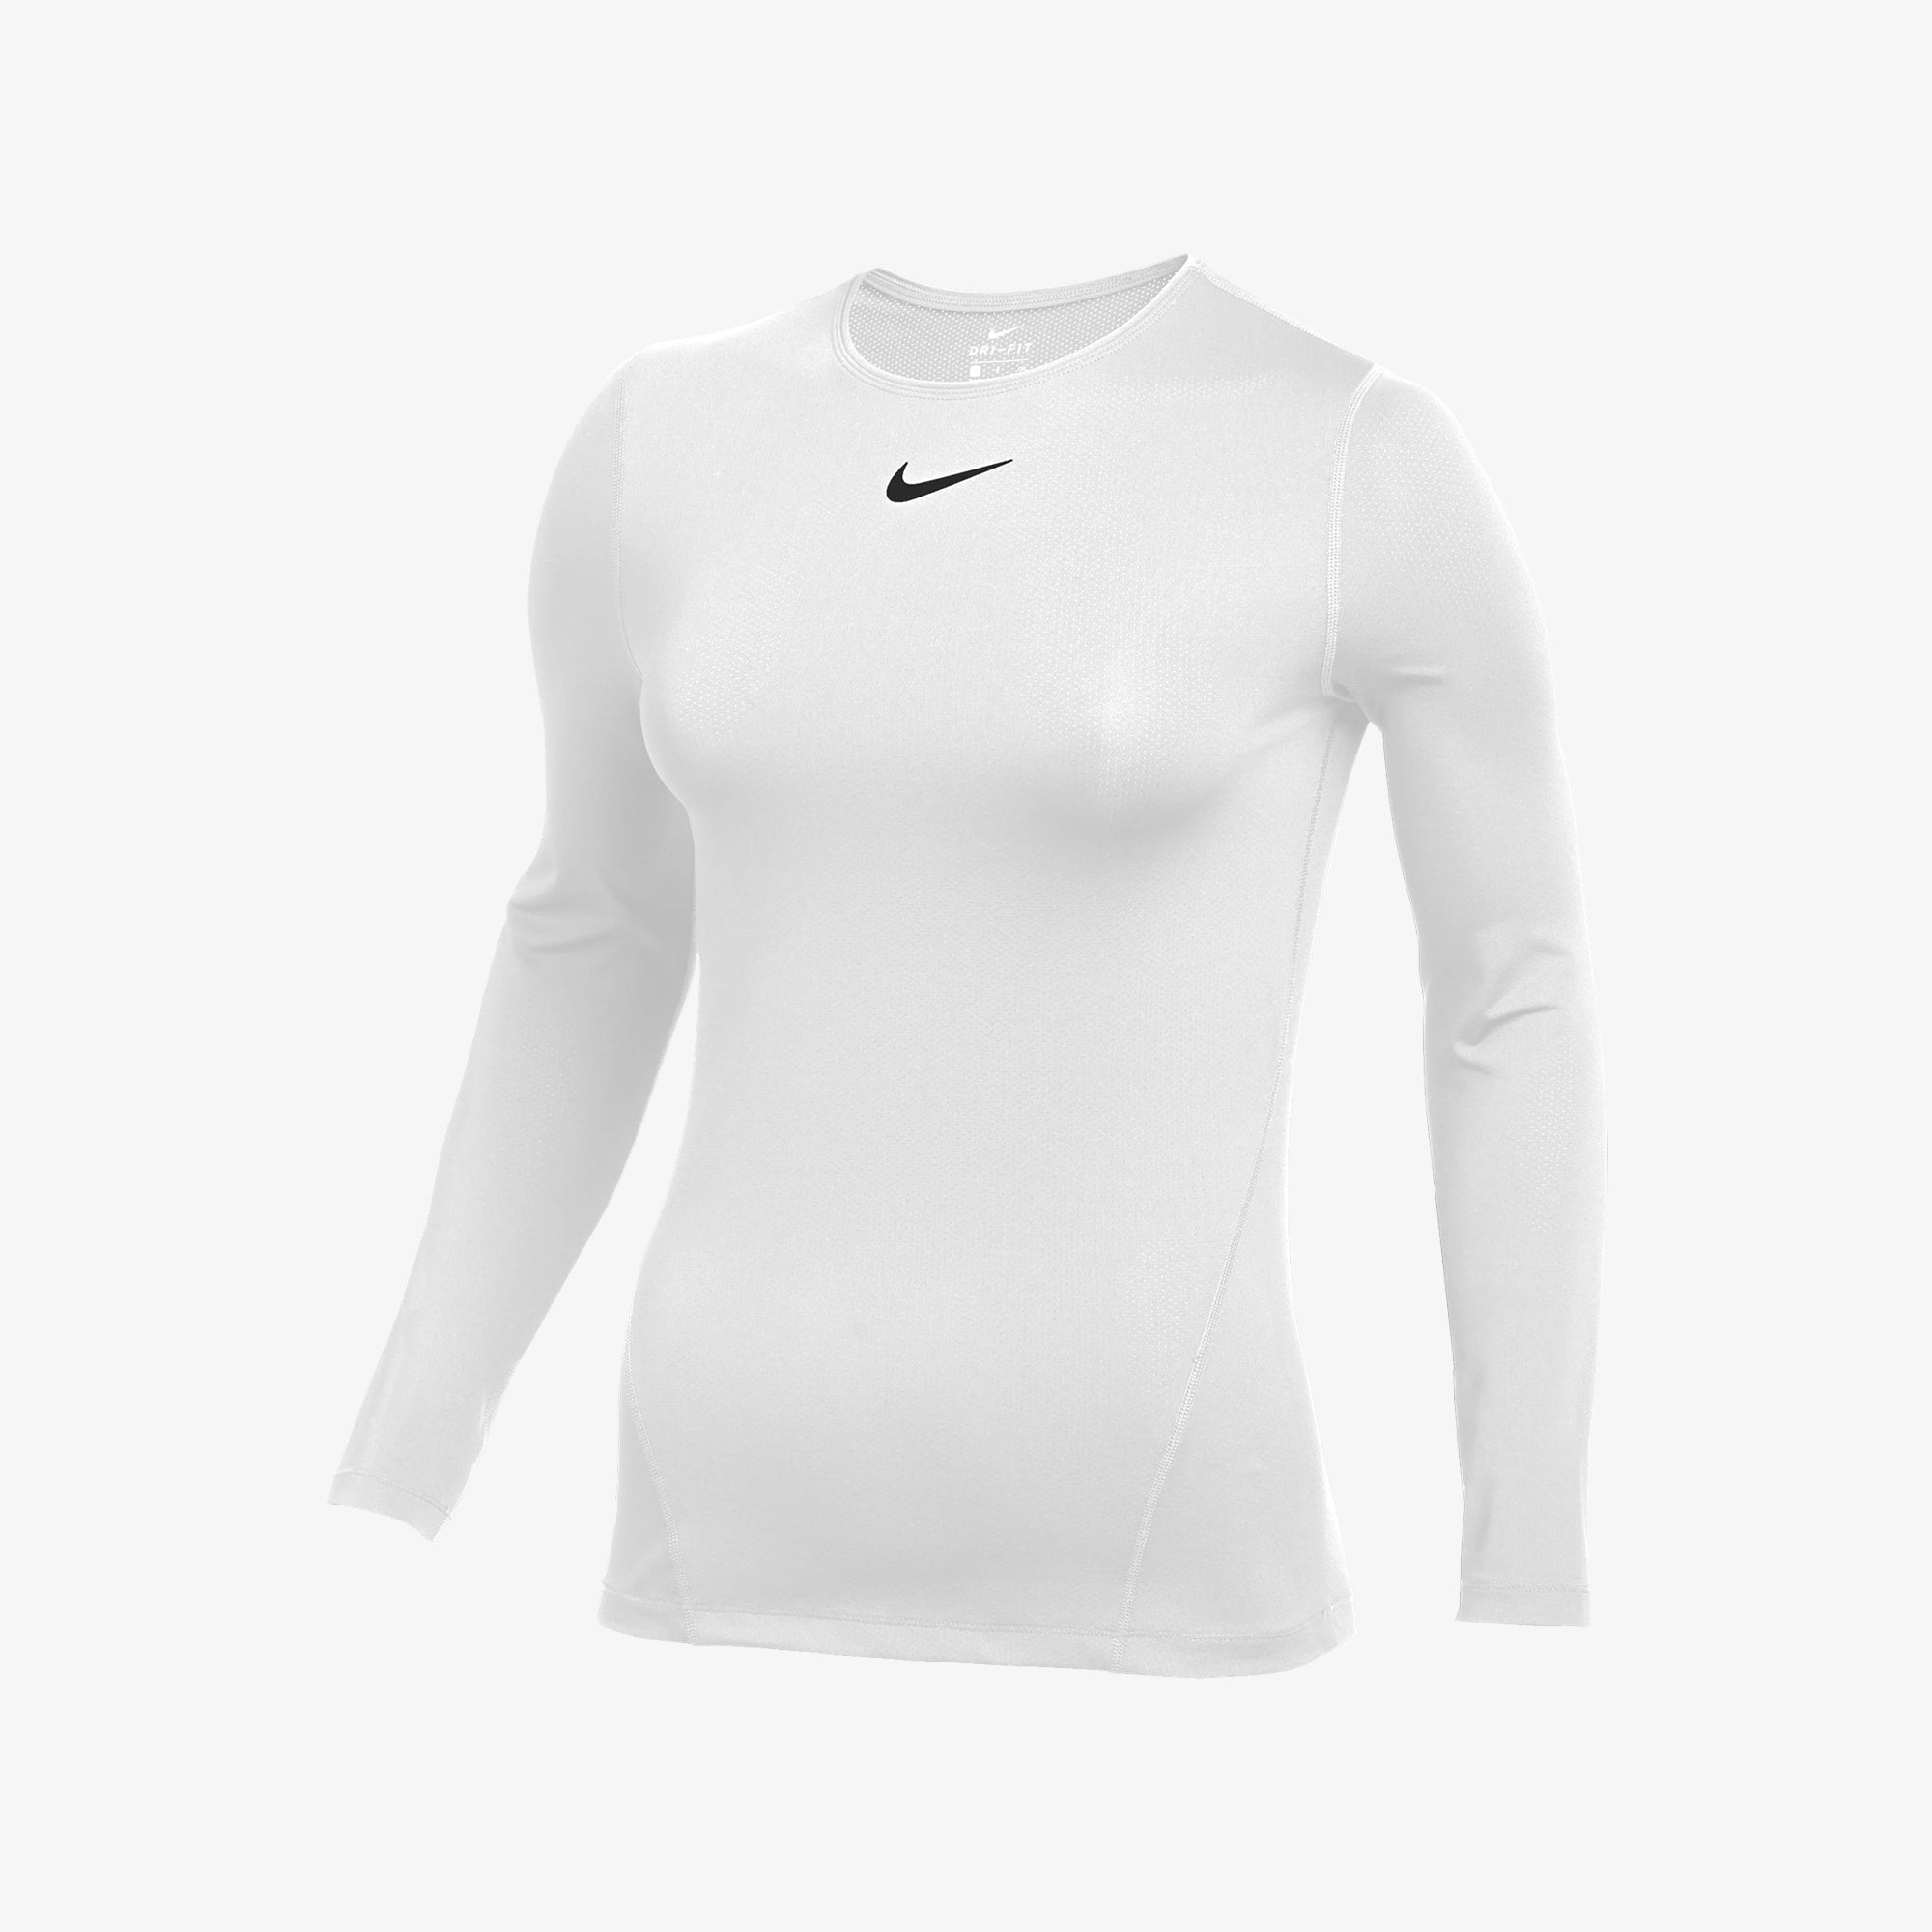 Nike Women's Pro All Over Mesh Training Long Sleeve Top White, L